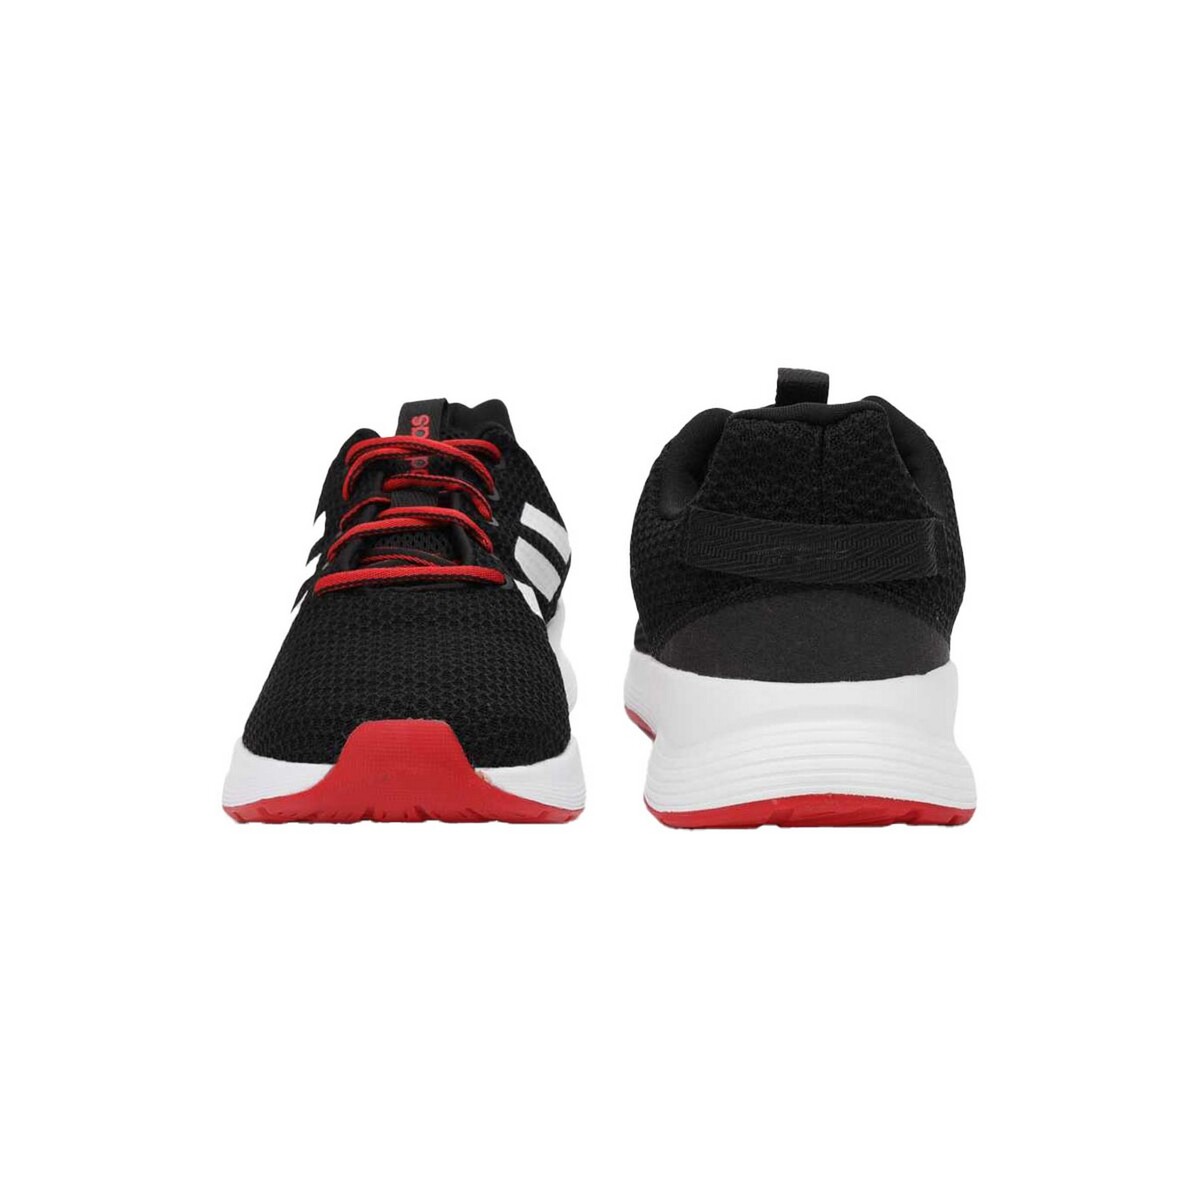 Adidas Mens Sports Shoes CM4940, 9